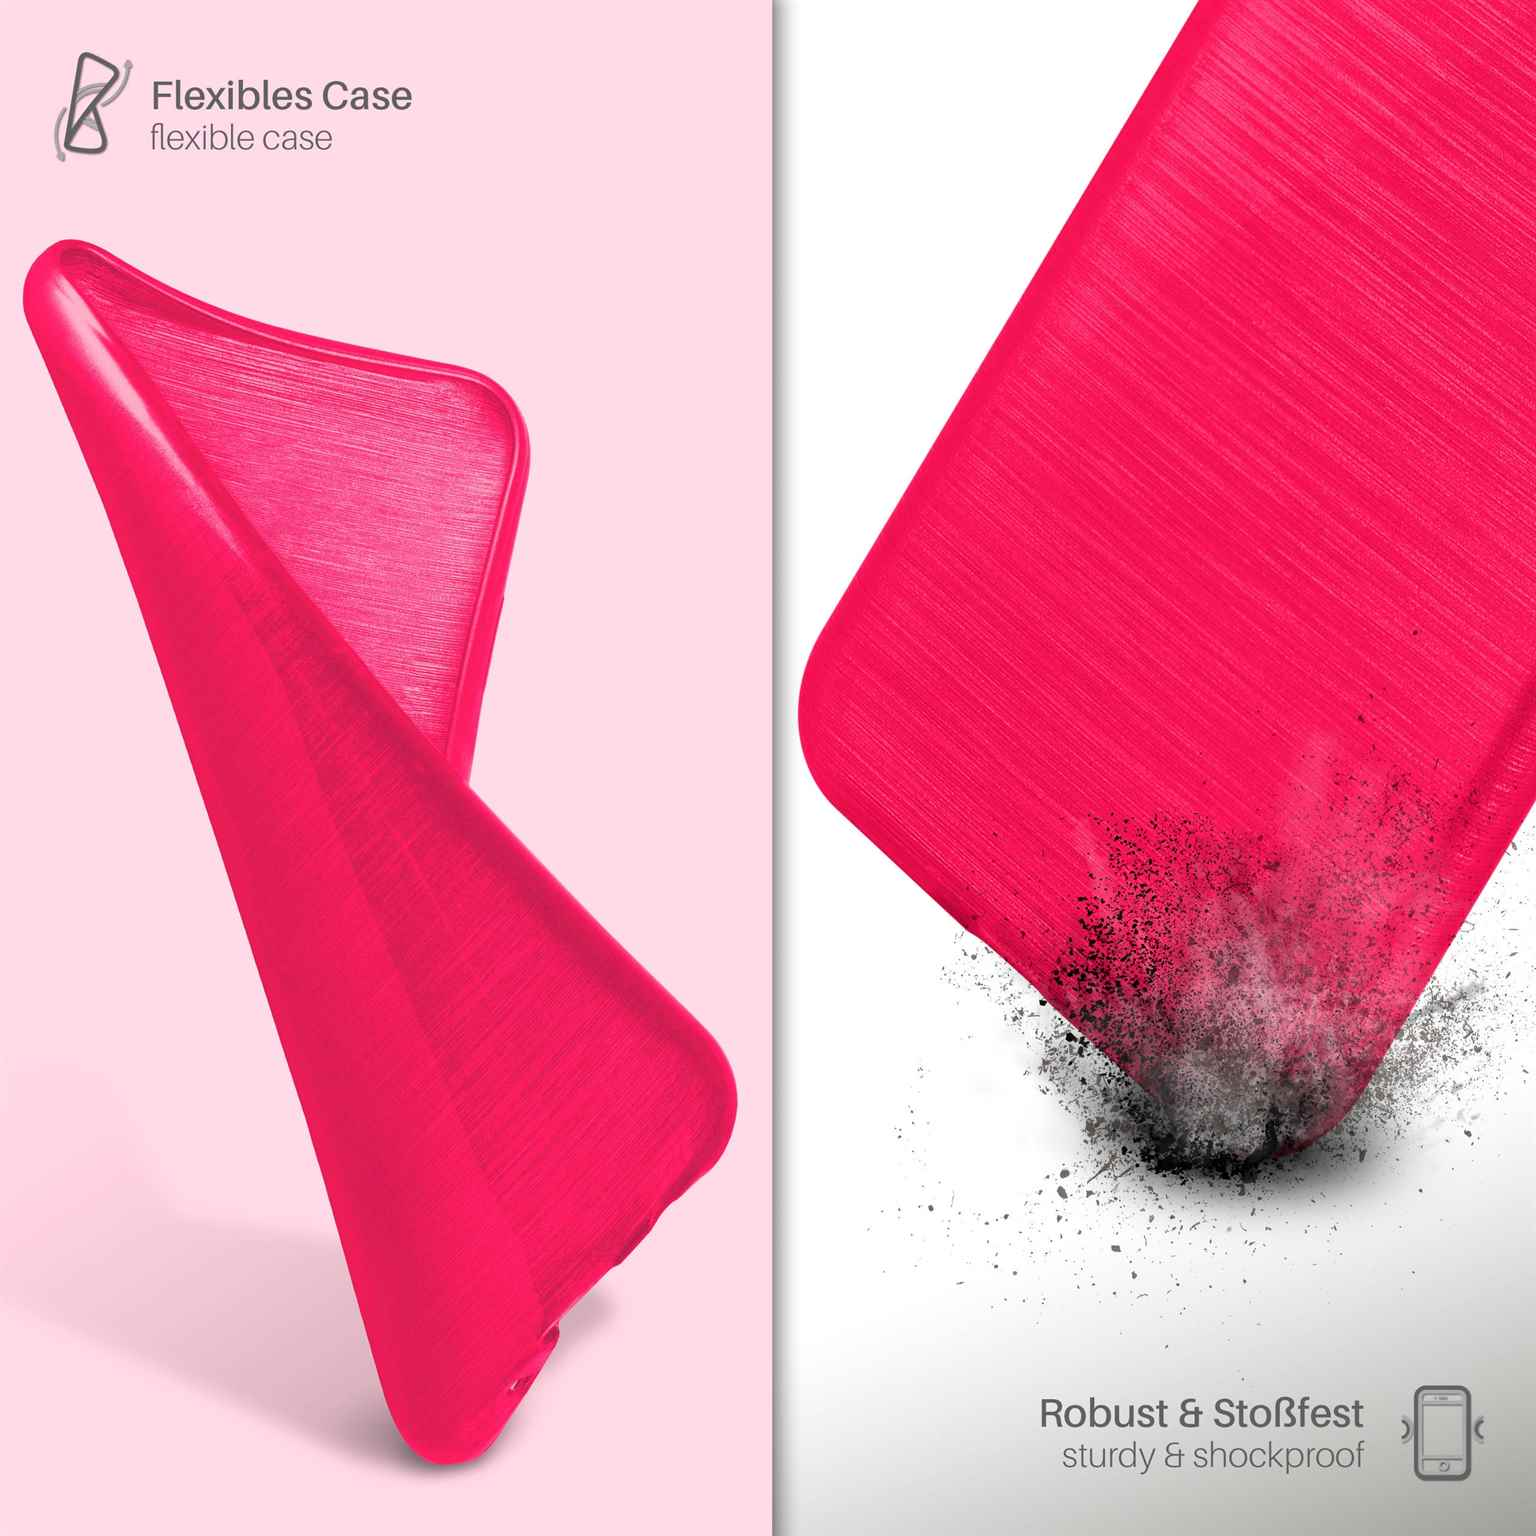 MOEX Brushed Case, Backcover, Apple, 4, iPhone Magenta-Pink